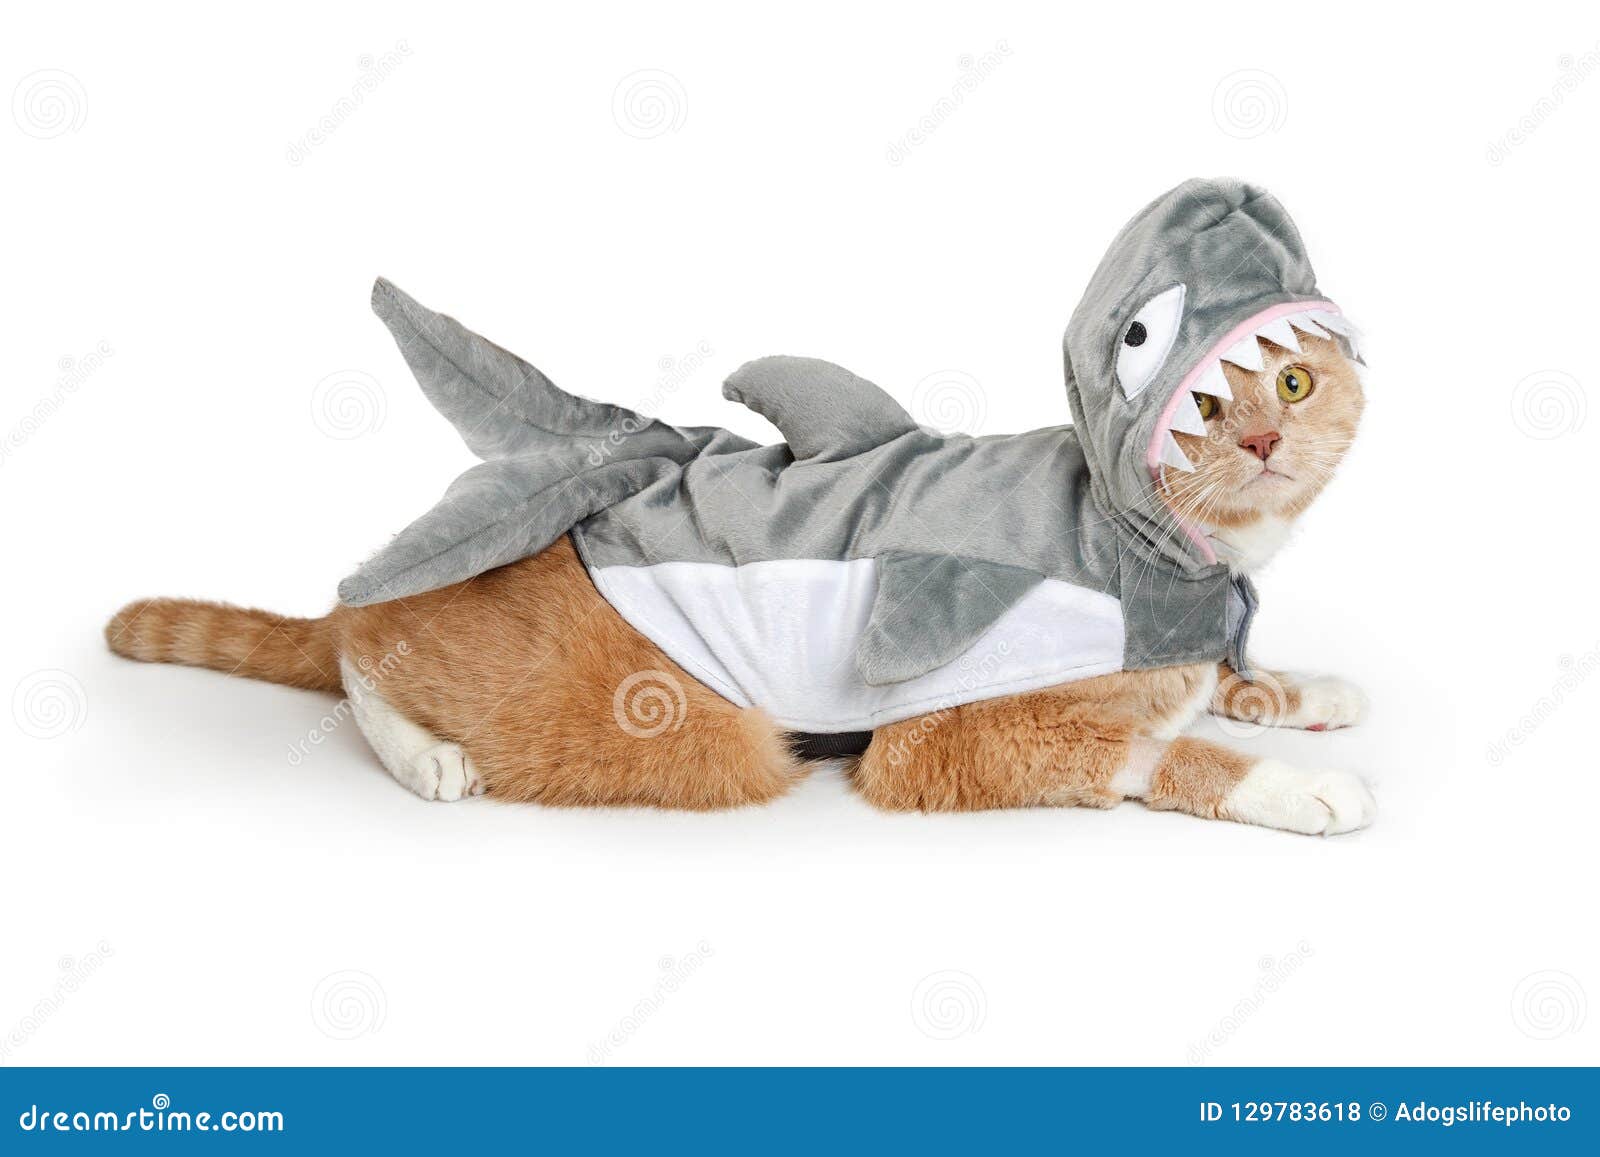 cat wearing funny shark halloween costume